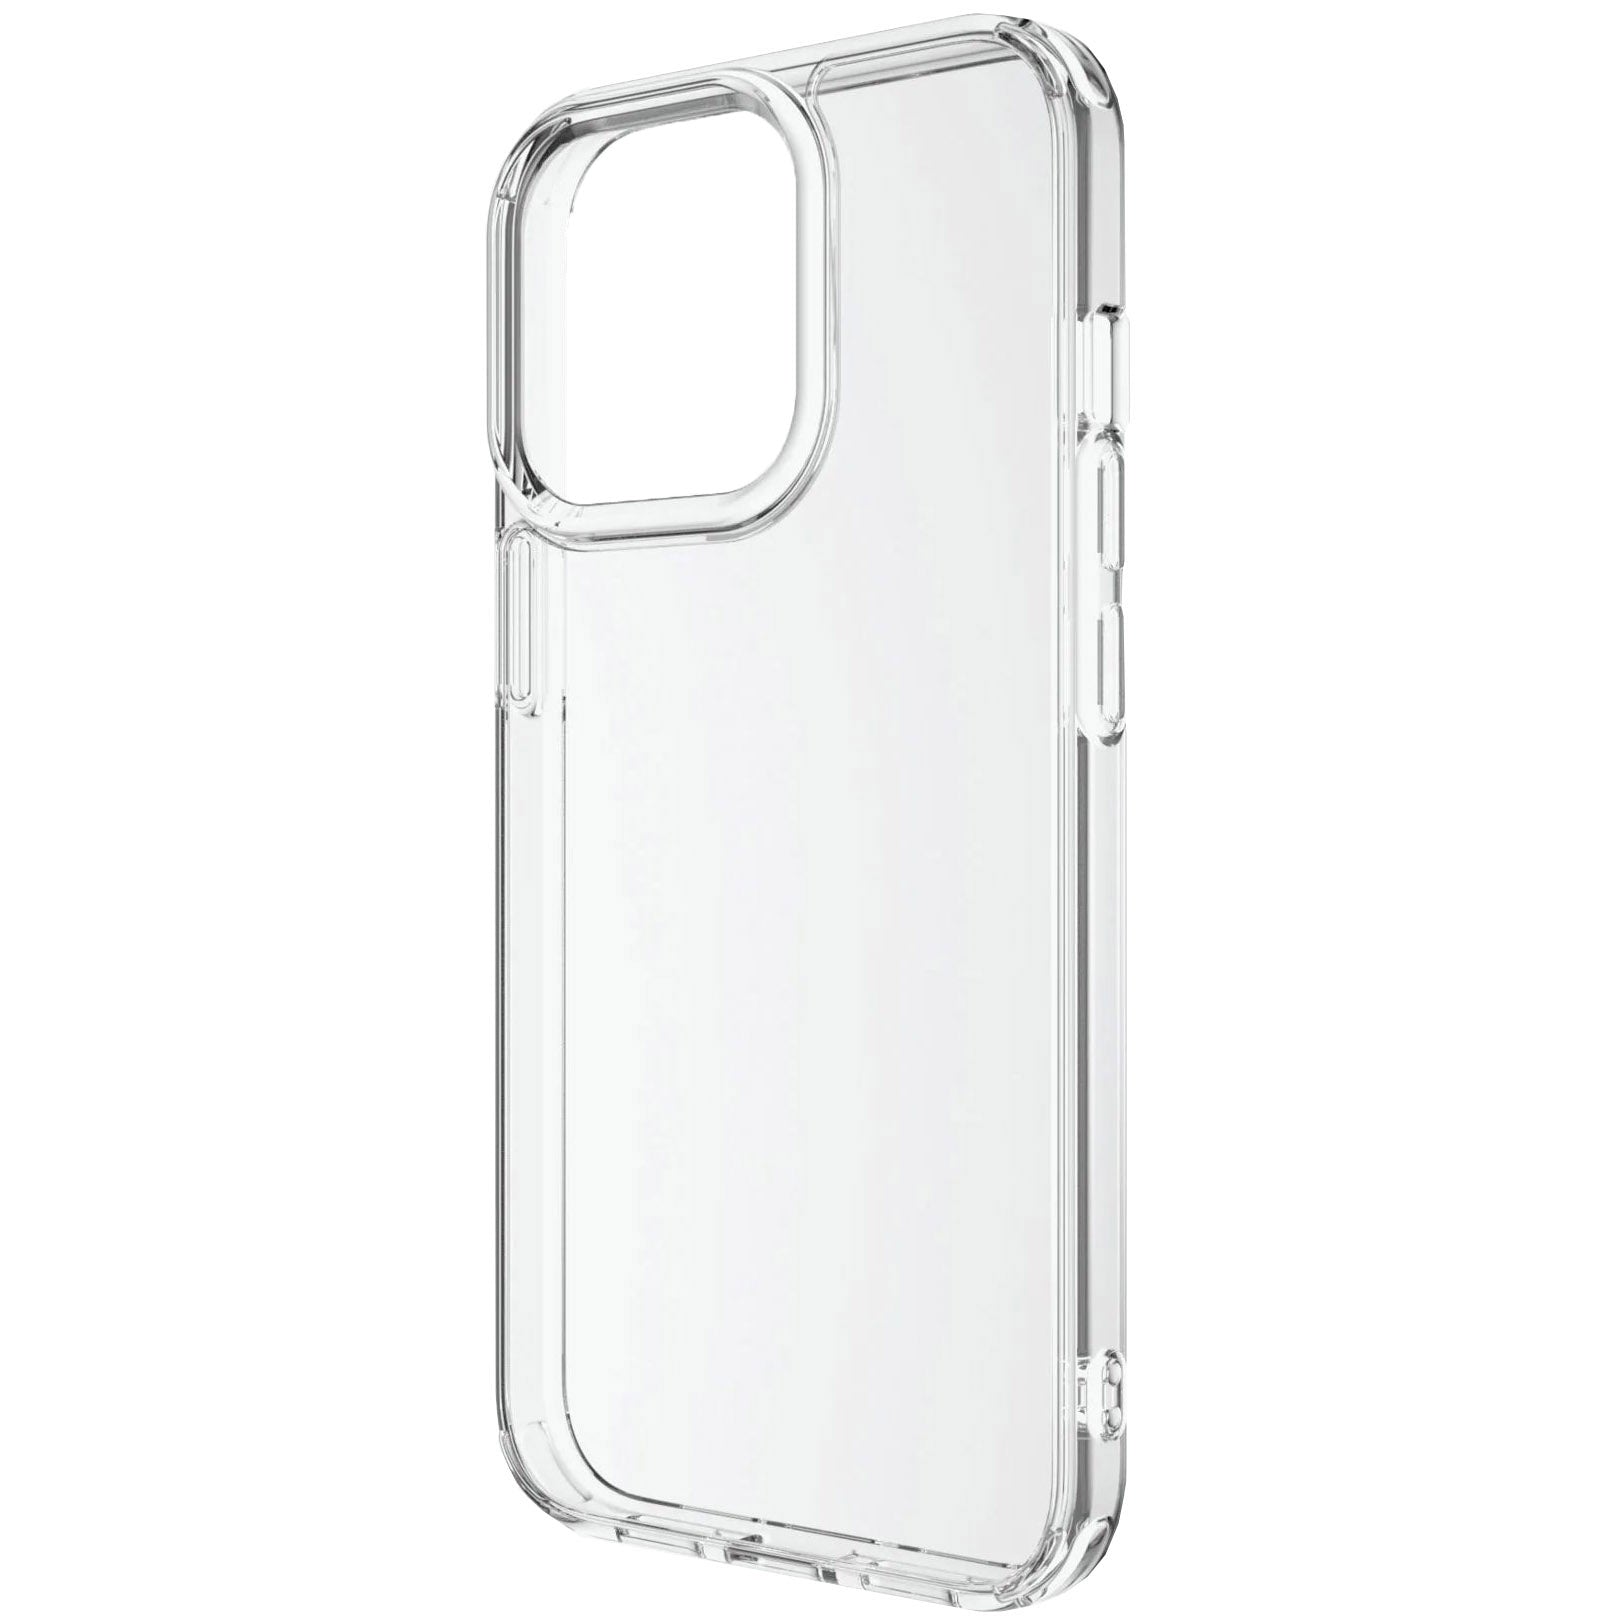 Antibakterielle Schutzhülle PanzerGlass HardCase für iPhone 13 Pro, transparent